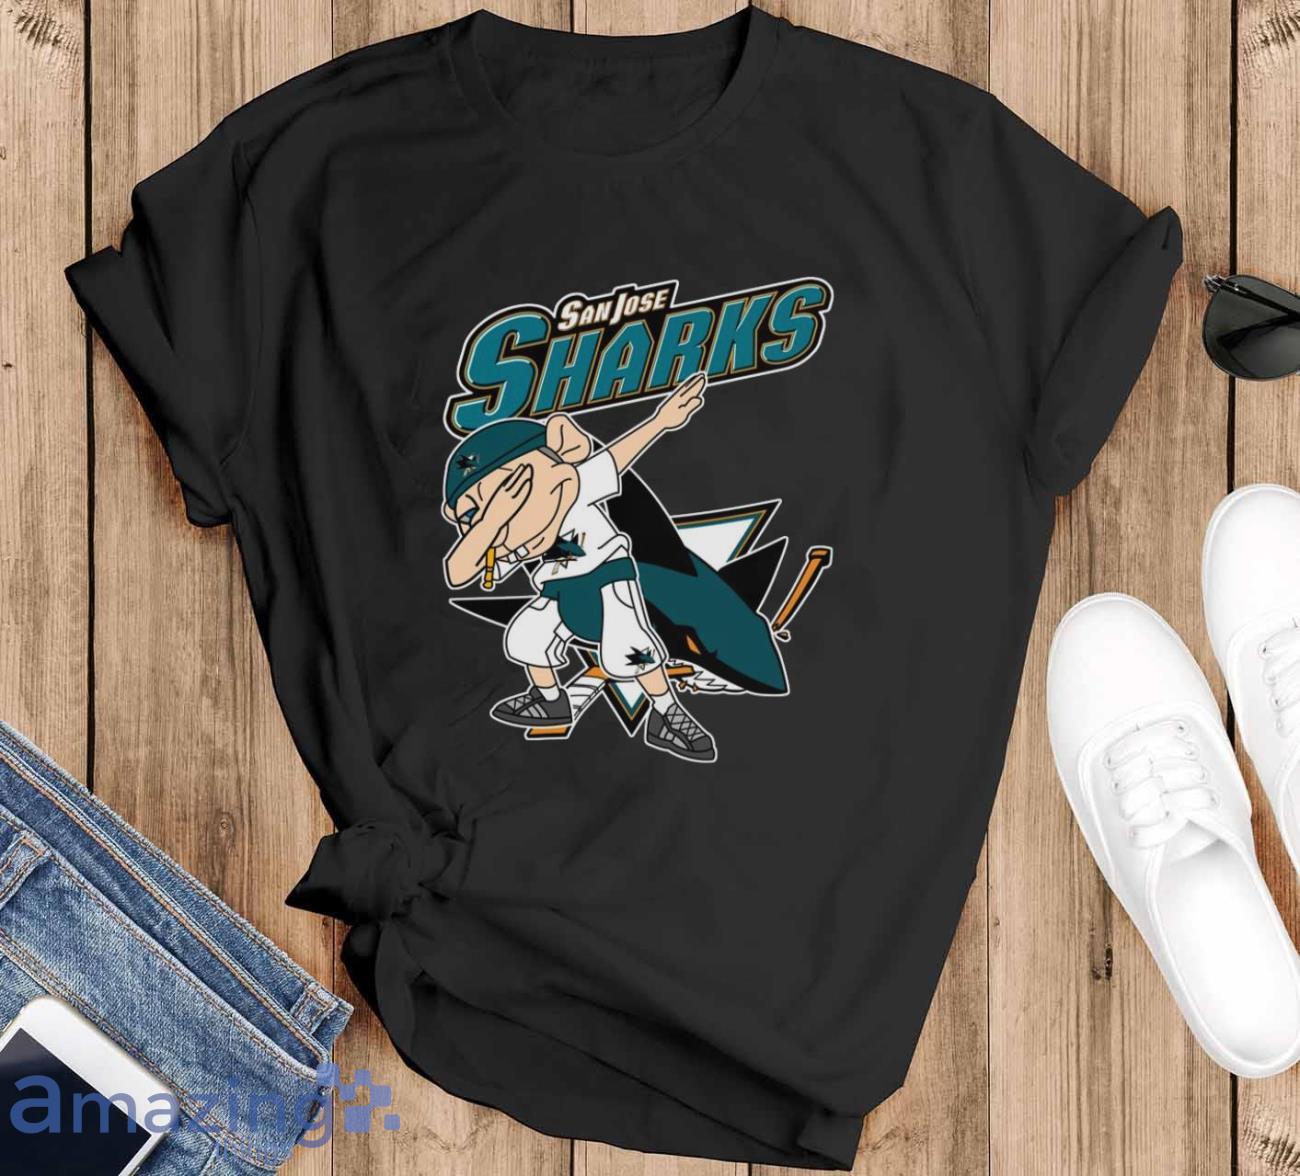 90s San Jose Sharks T-shirt Large Graphic NHL Tee Shirt 